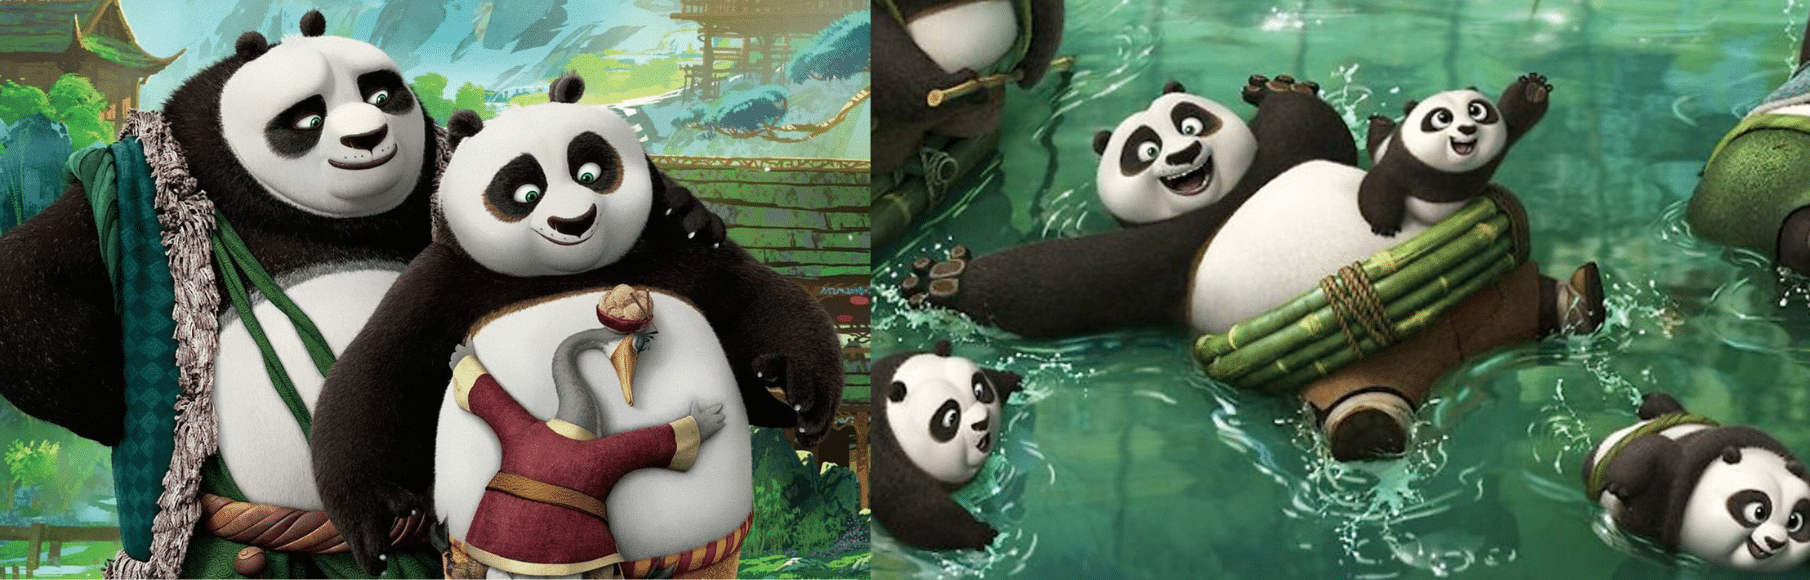 Kung Fu Panda Movie Collage Images